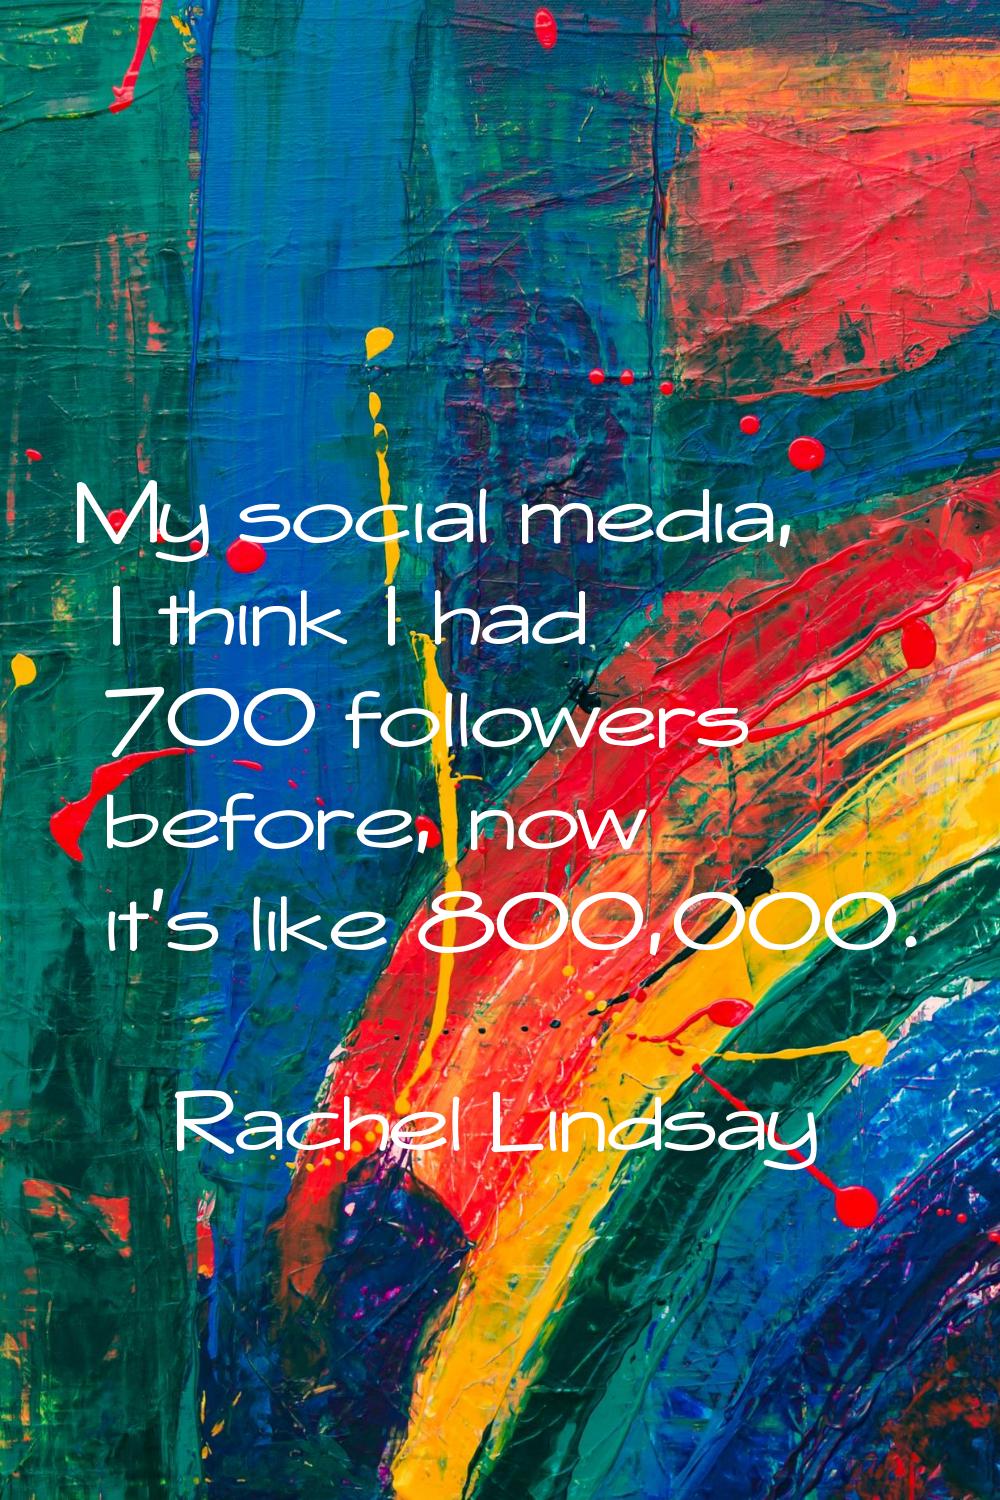 My social media, I think I had 700 followers before, now it's like 800,000.